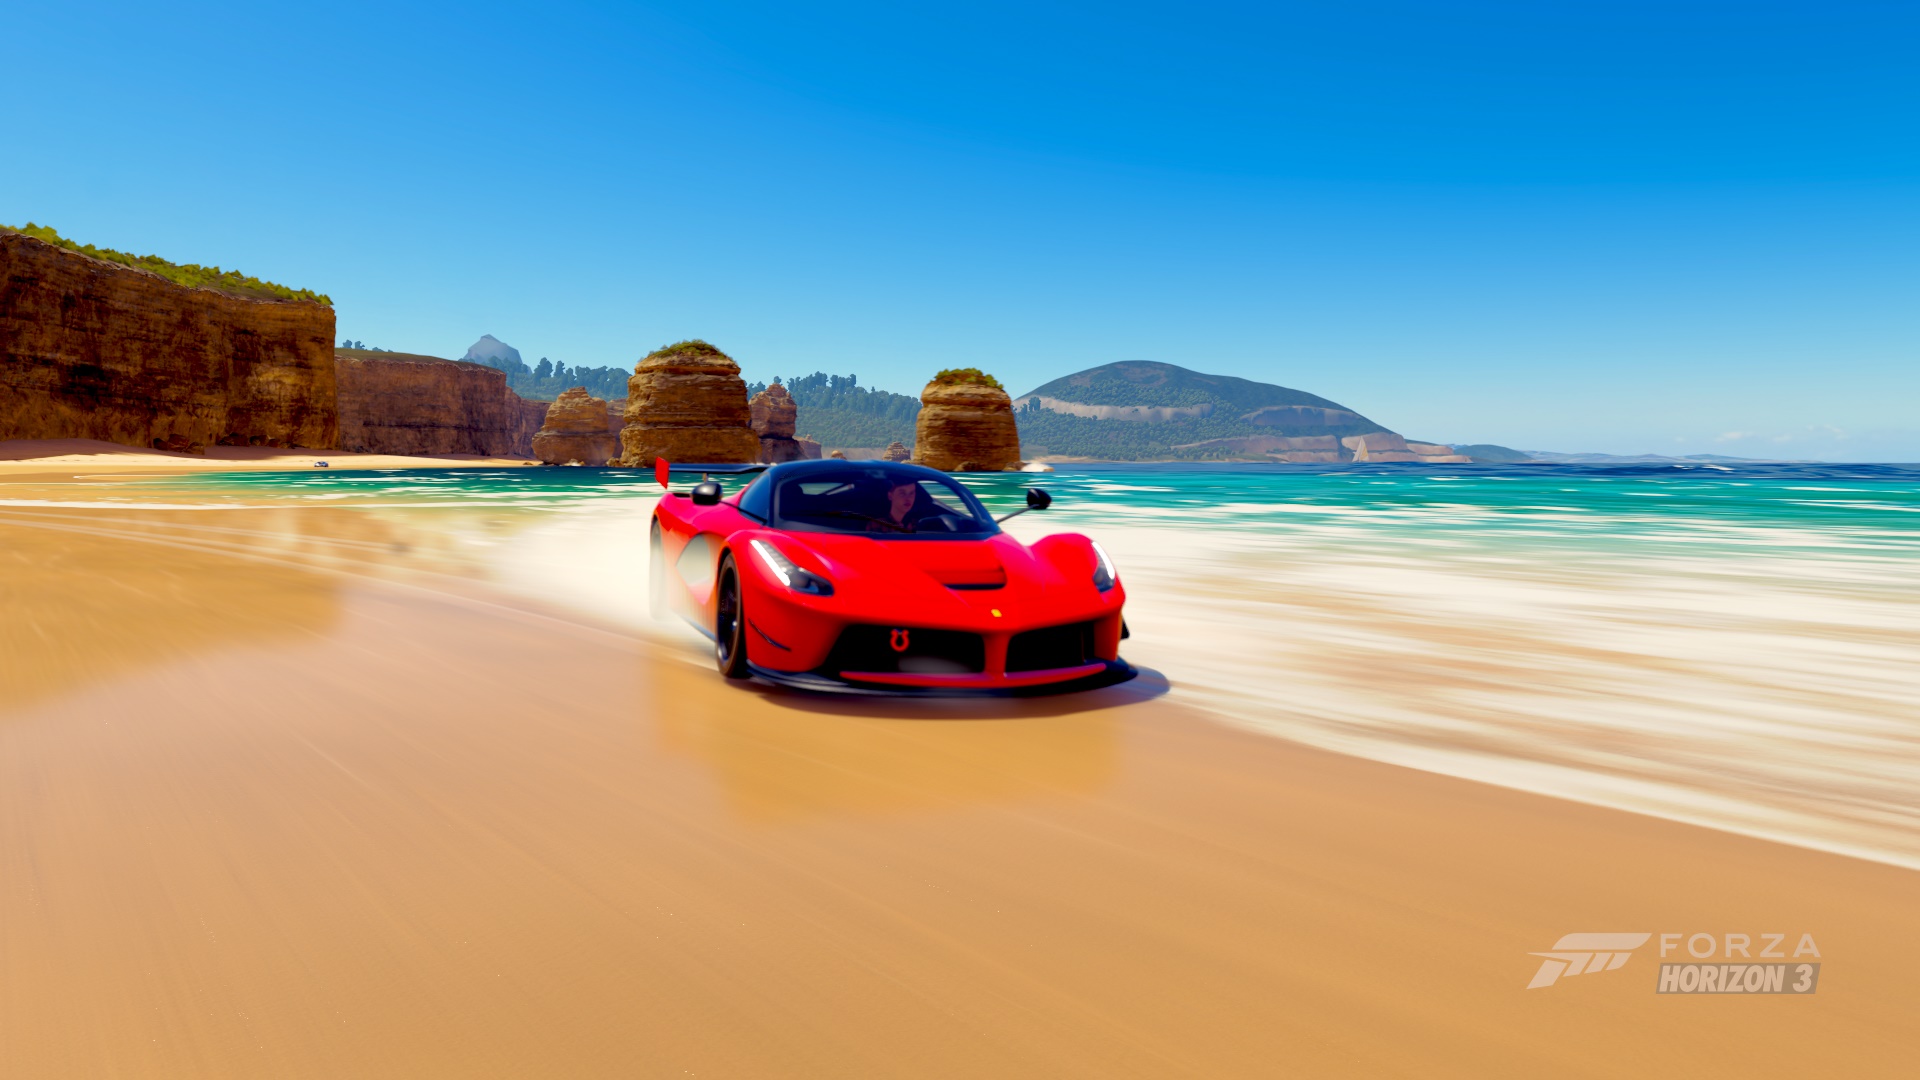 Descarga gratuita de fondo de pantalla para móvil de Agua, Playa, Coche, Fuerza, Videojuego, Ferrari La Ferrari, Forza Horizon 3.